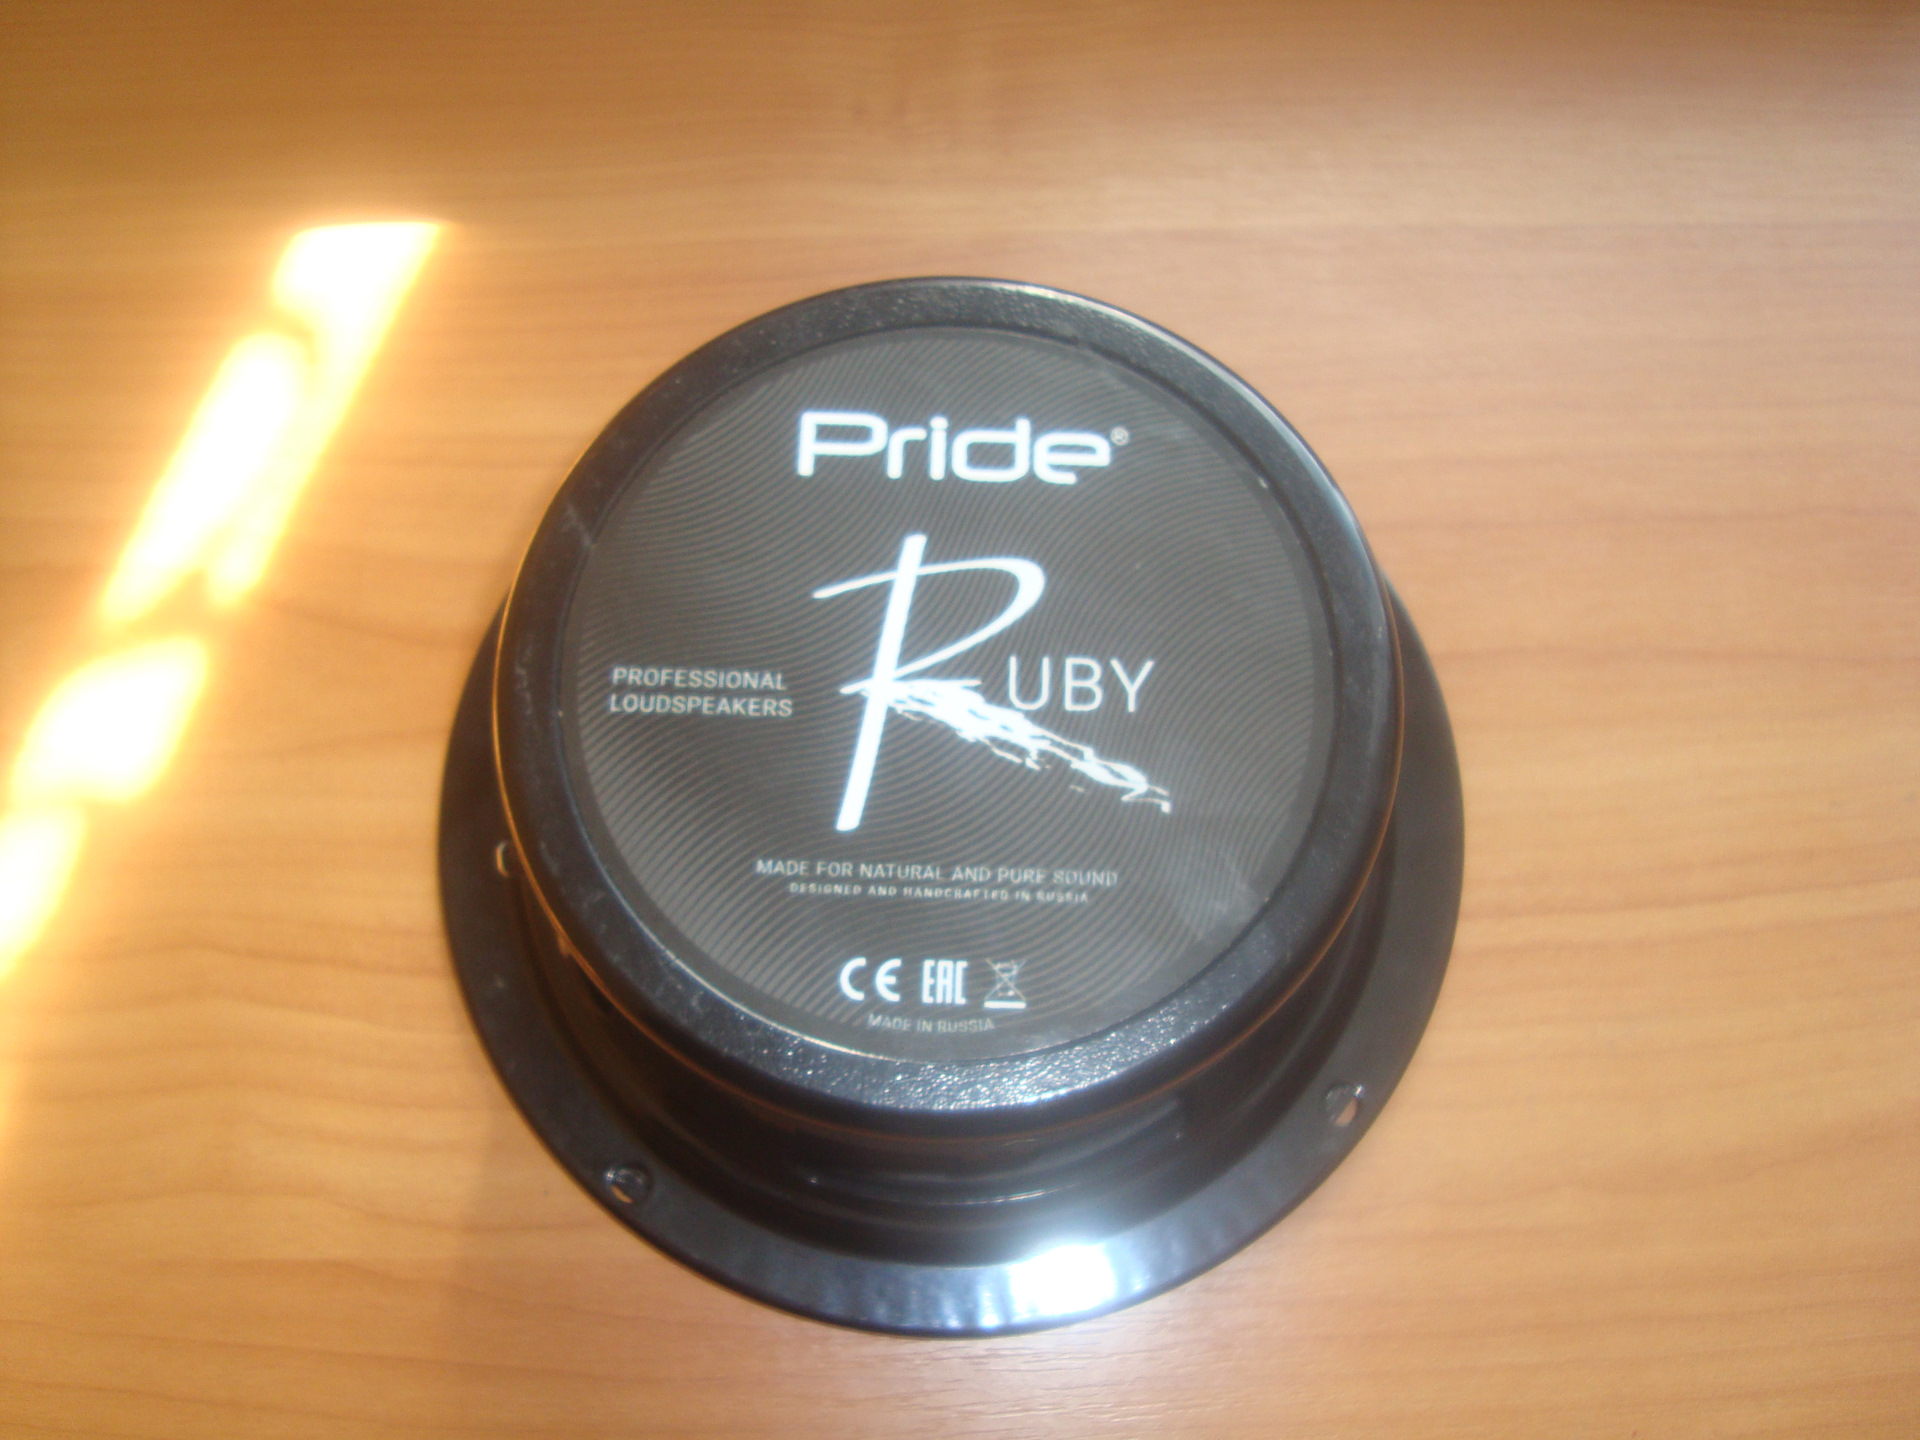 Прайд руби 16. Pride Ruby 16.5. Прайд Руби воч 6.5. Pride Ruby 6.5.